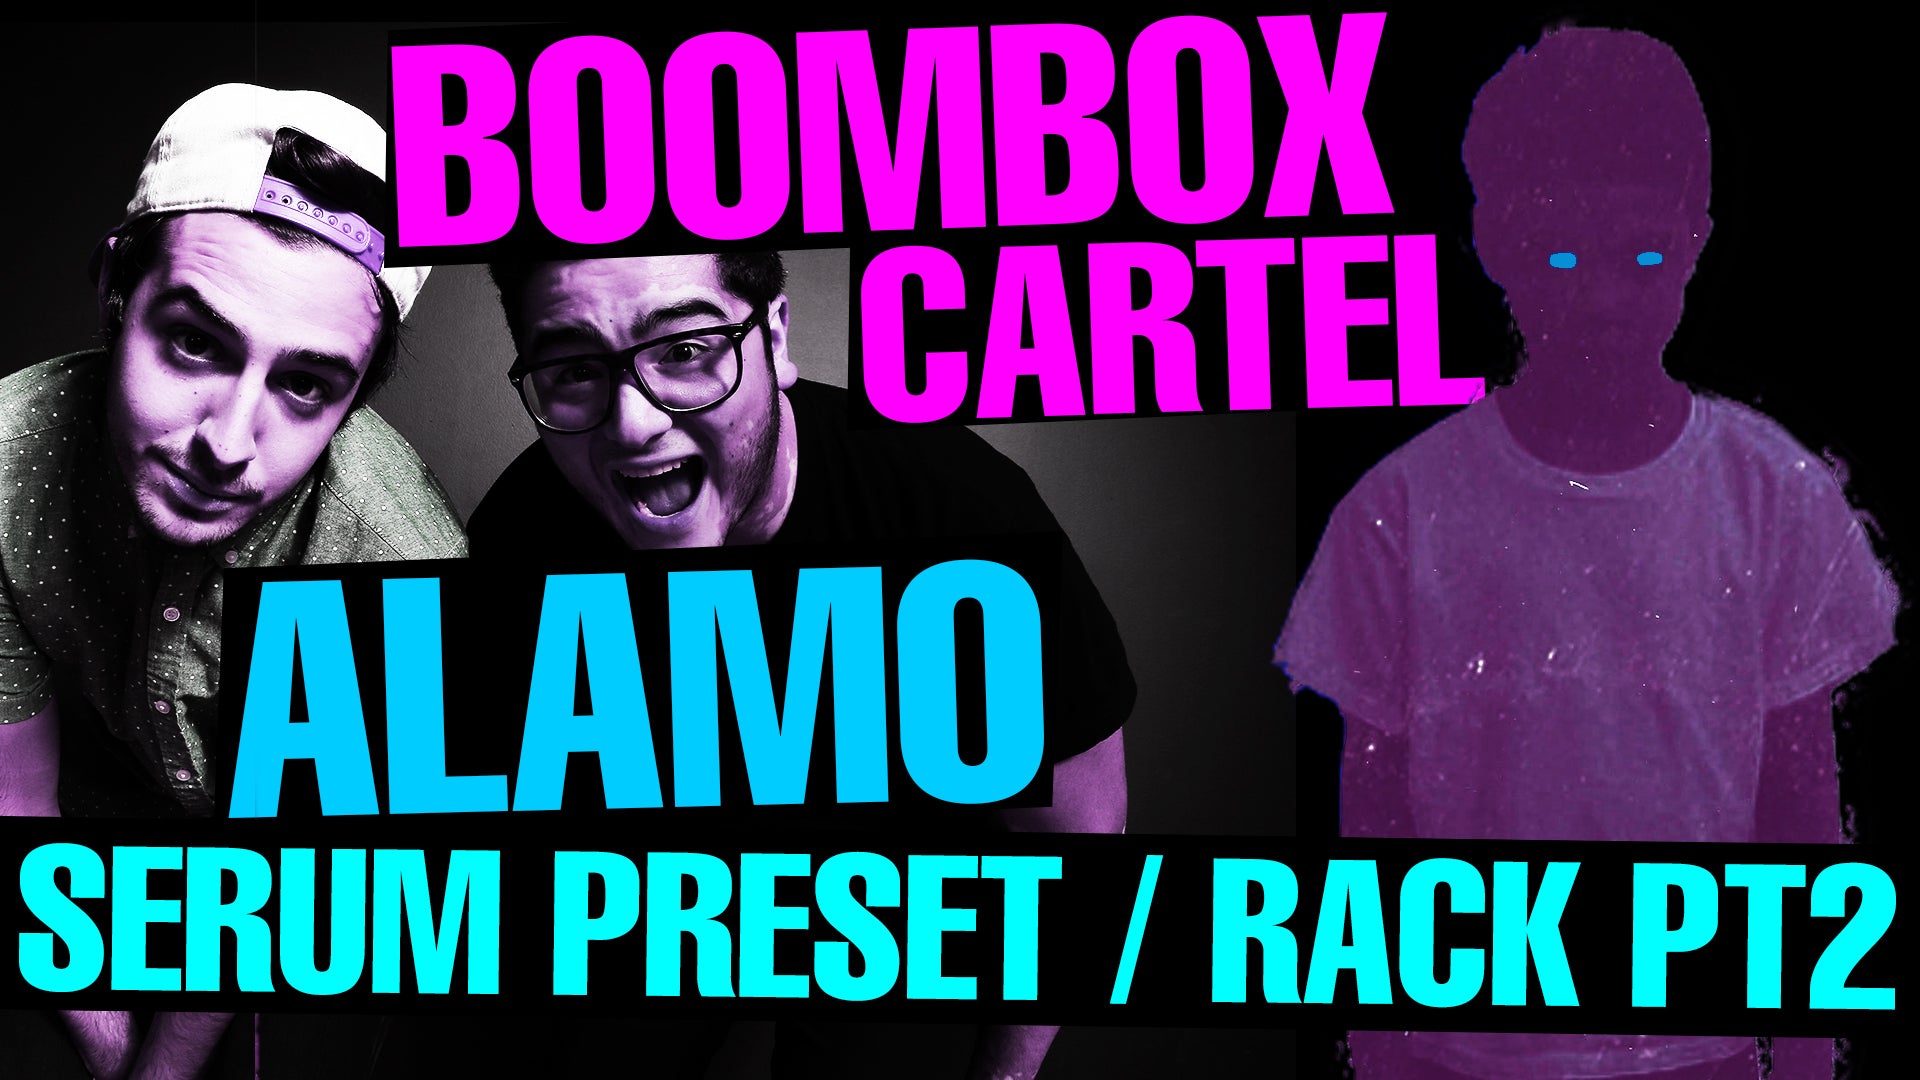 Boombox Cartel - Alamo PT2 Serum Preset / Ableton FX Rack